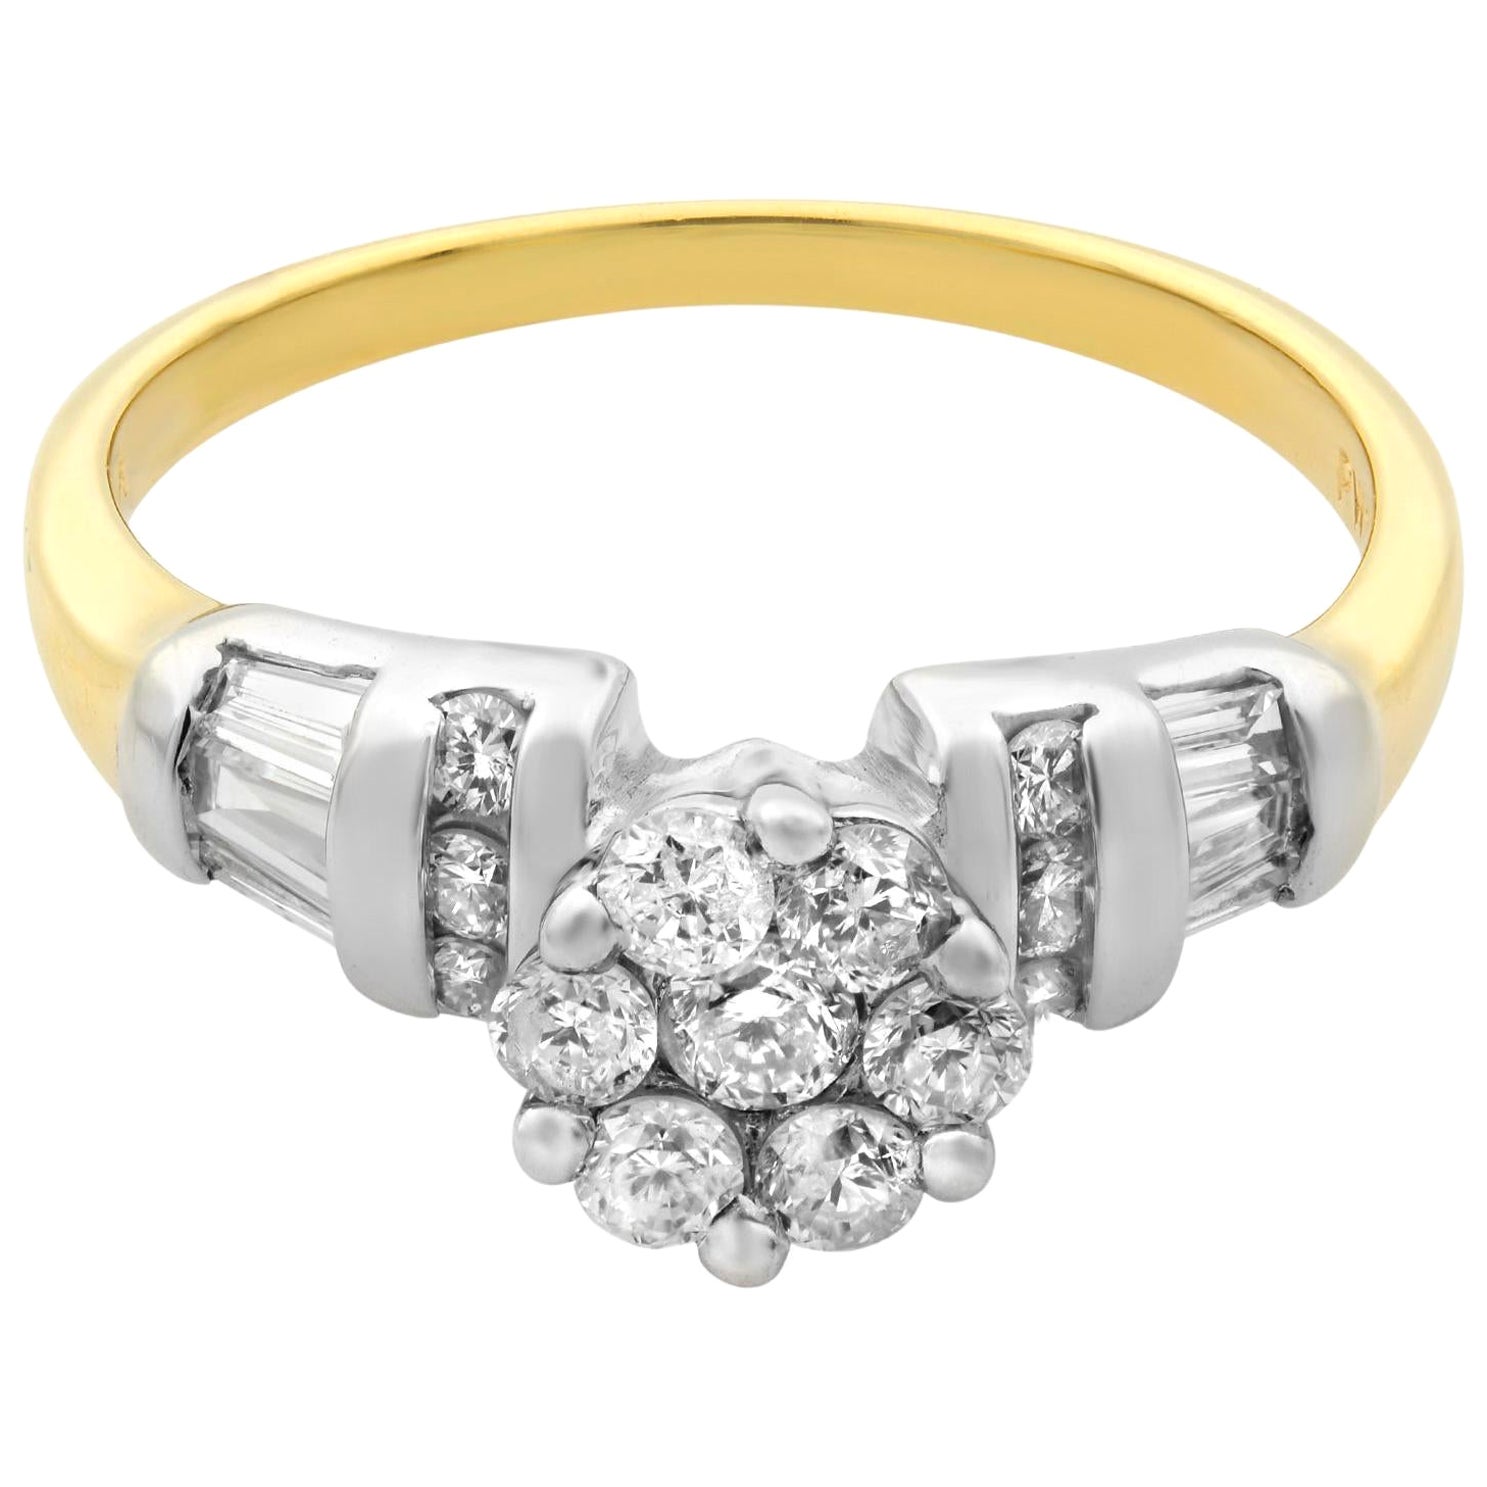 Rachel Koen Diamond Wedding Ring 14K White and Yellow Gold 0.25cttw